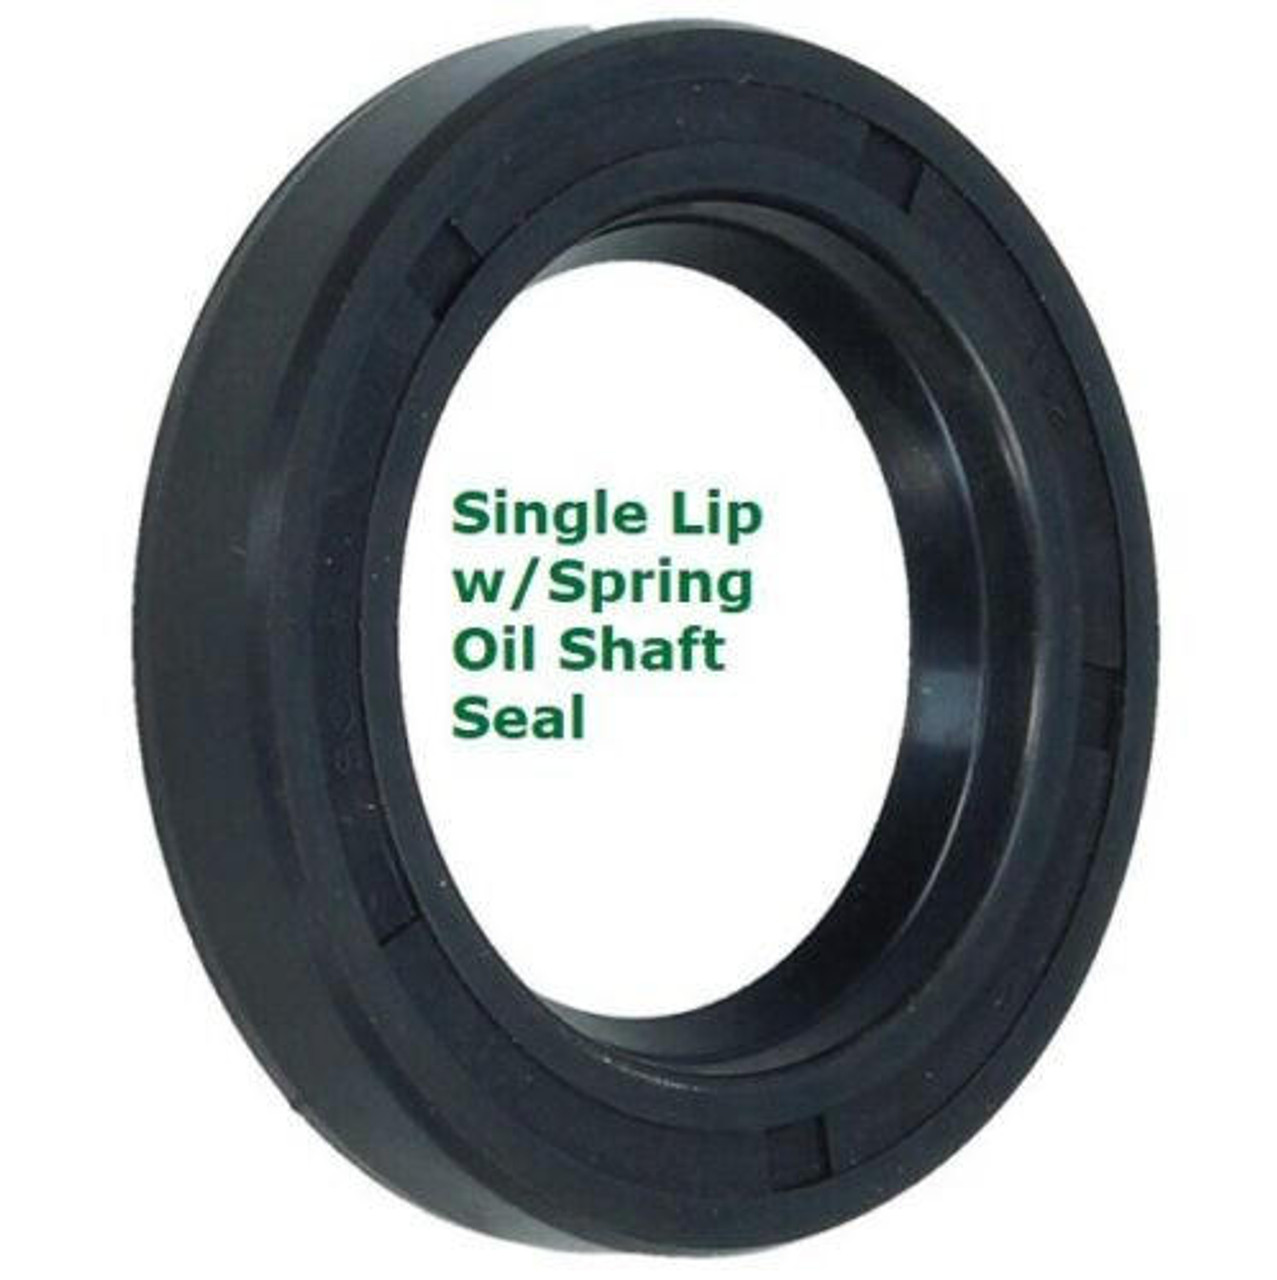 Metric Oil Shaft Seal 70 x 110 x 8mm Single Lip   Price for 1 pc